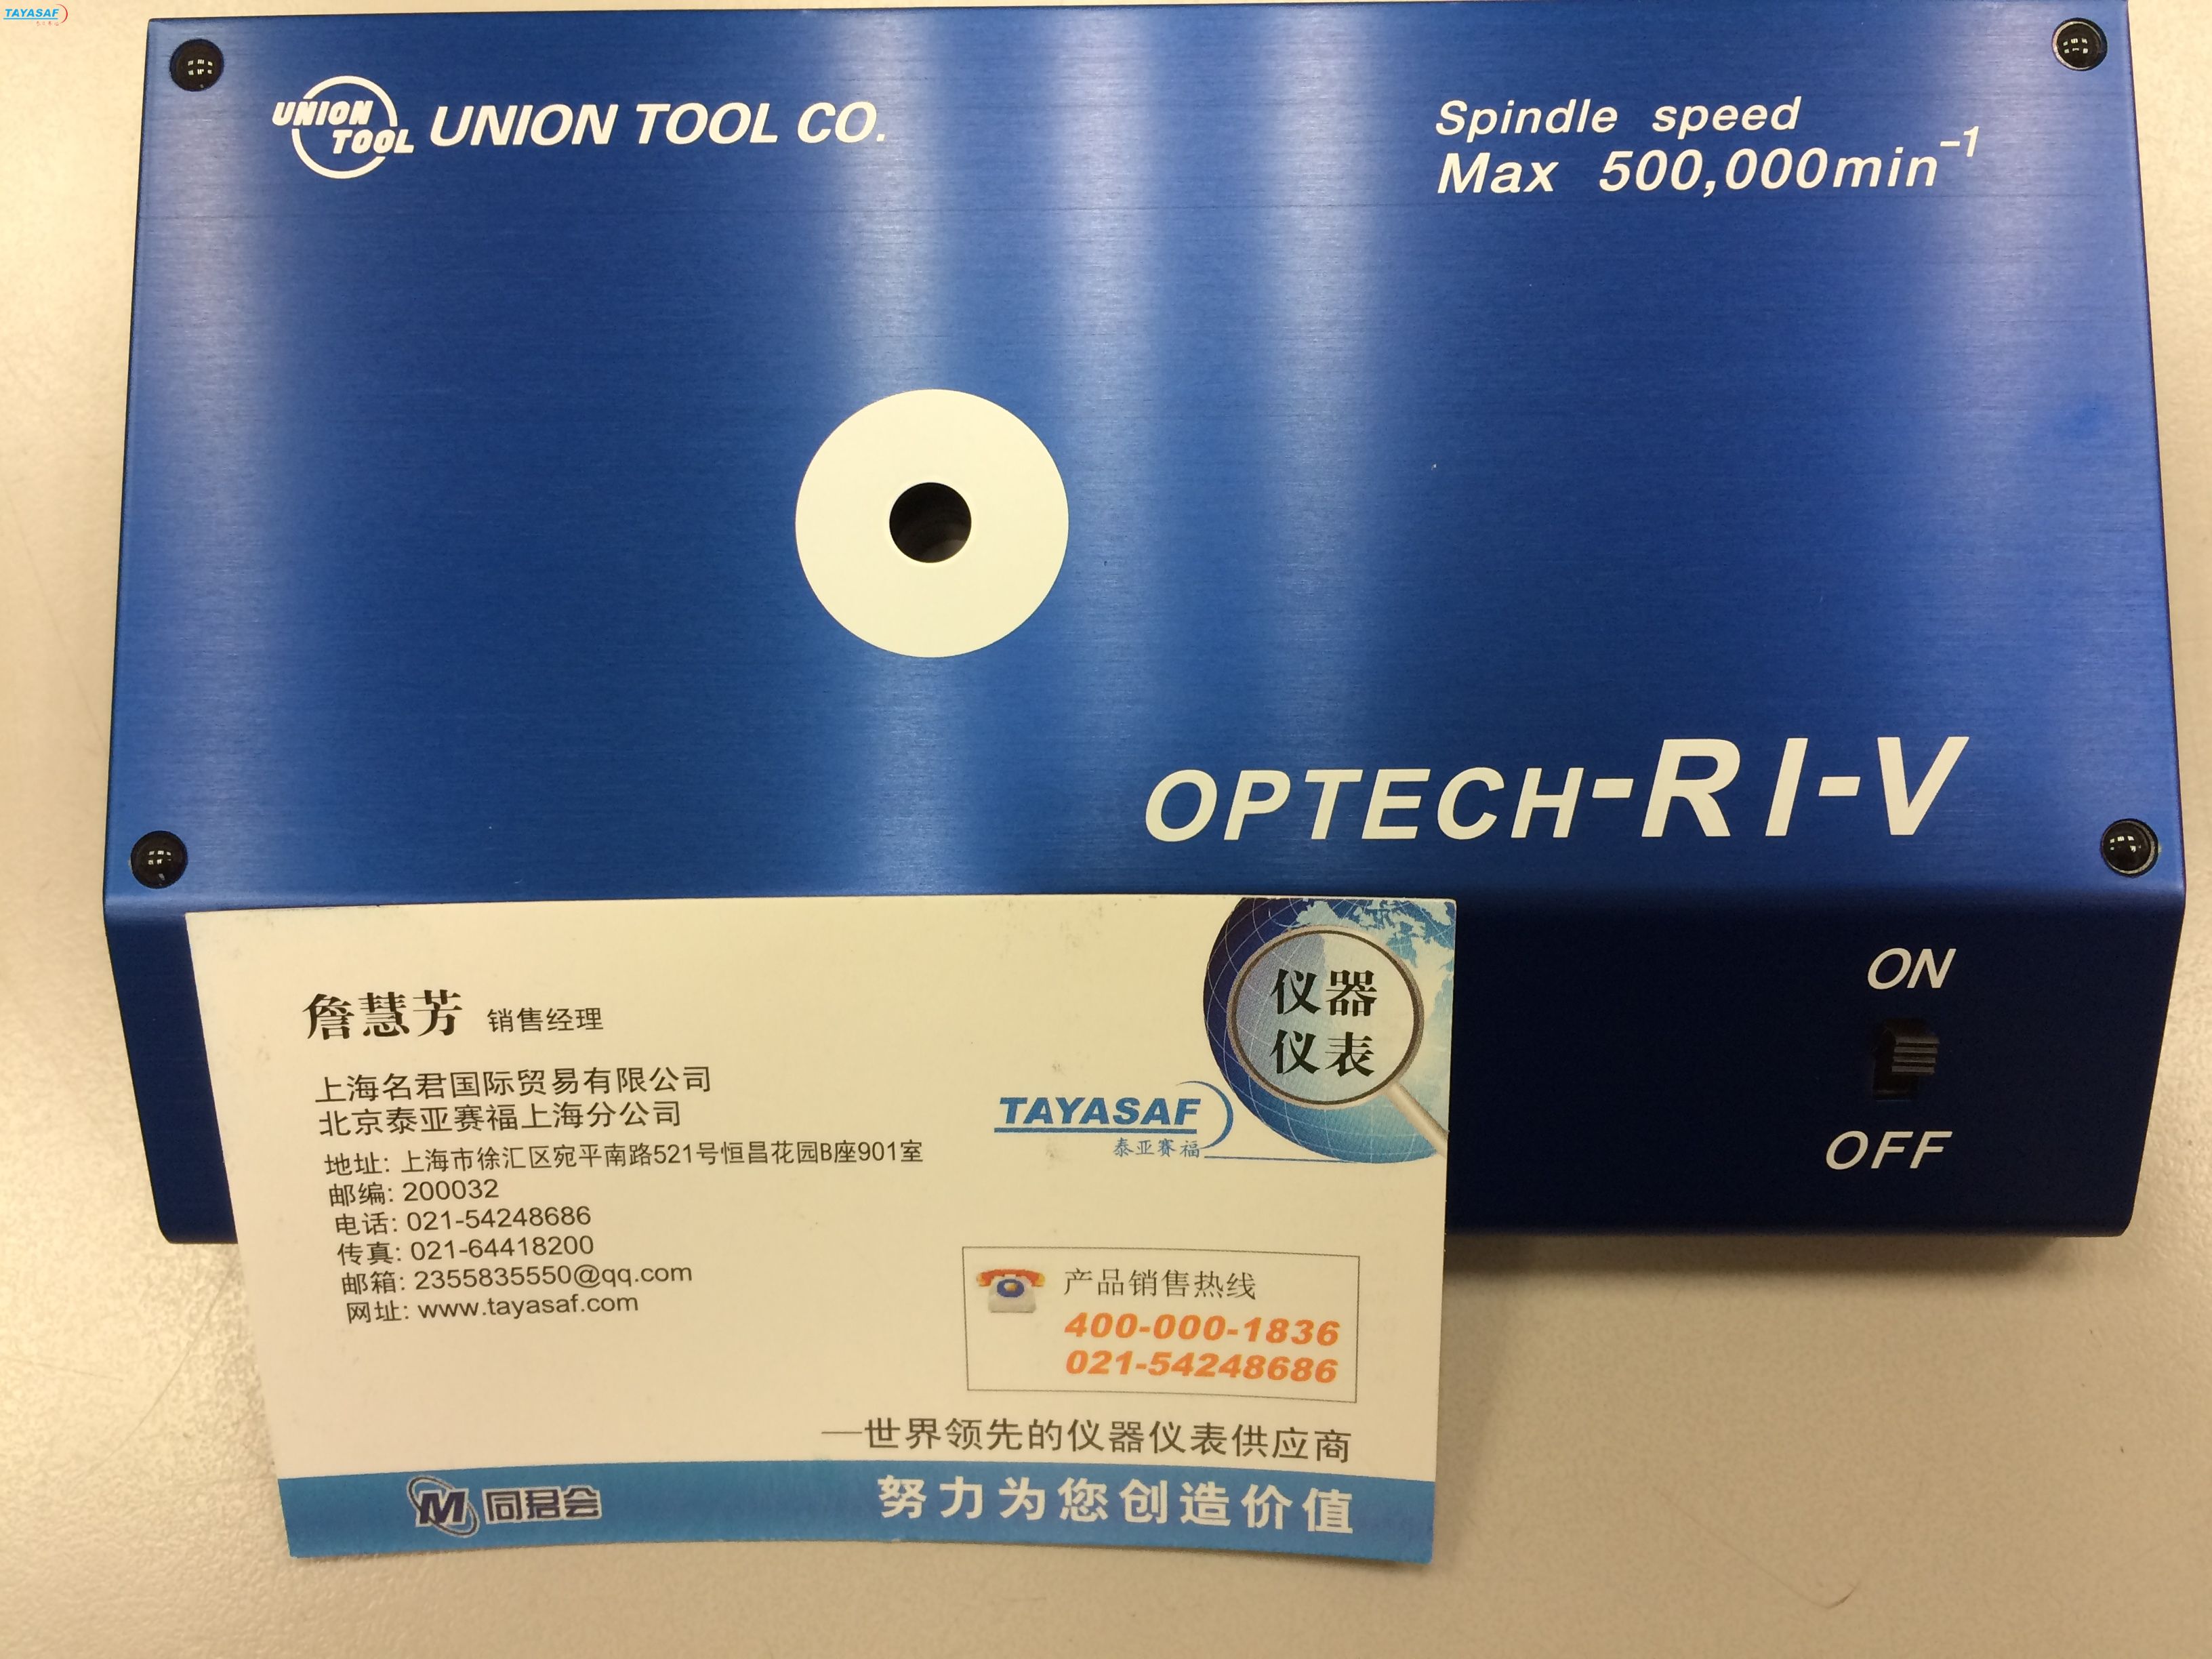 OPTECH-R1-V振动测试仪